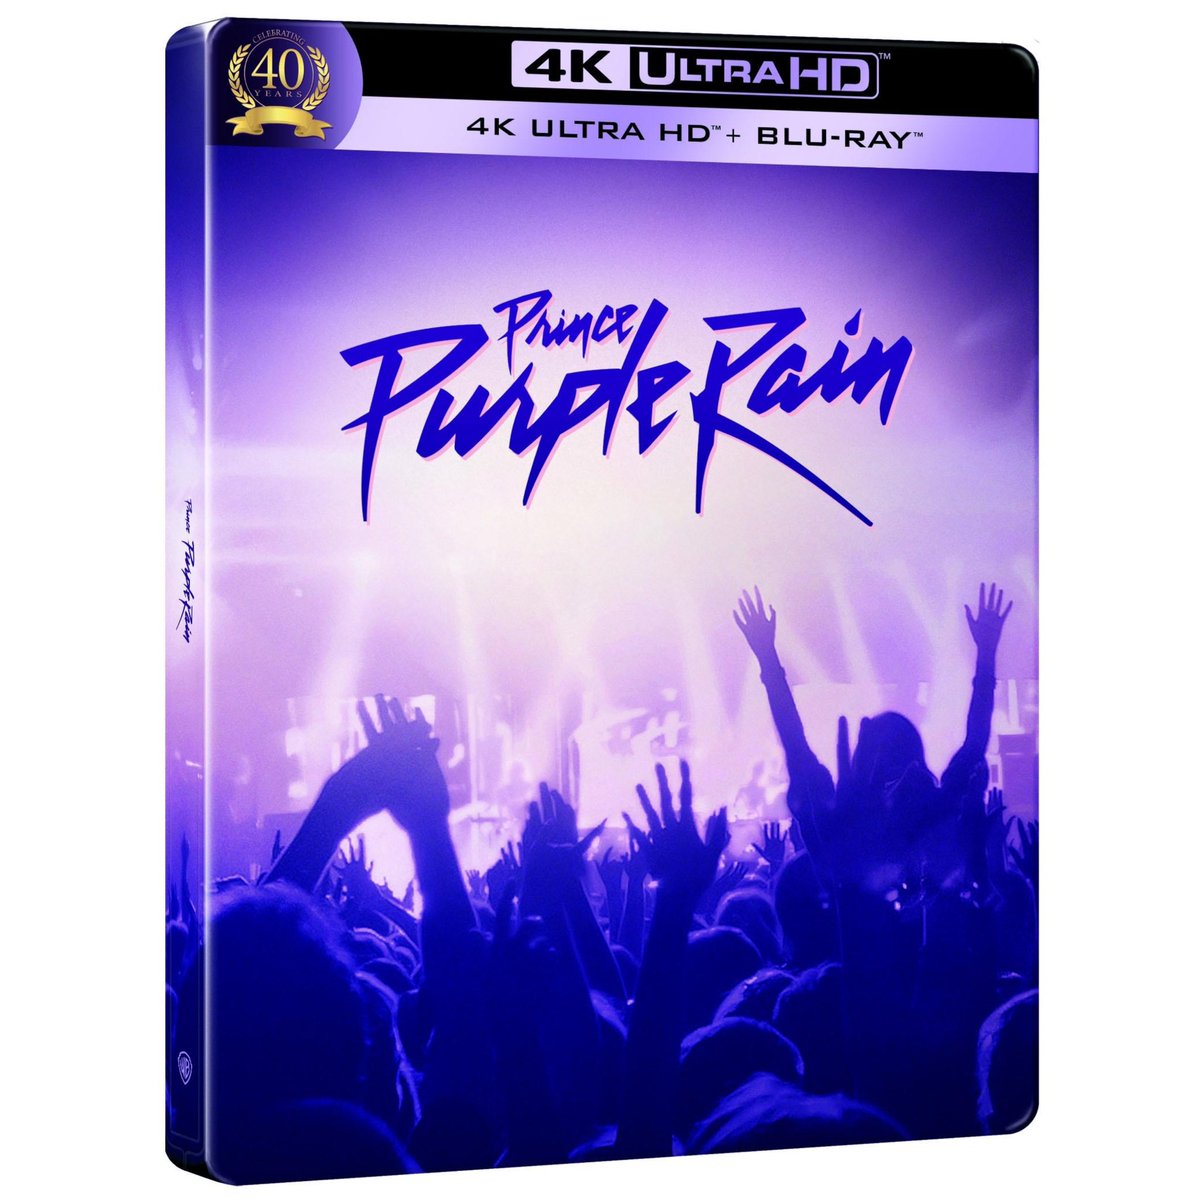 Warner Bros inept art department strikes again 🤦‍♂️

#PurpleRain #Prince